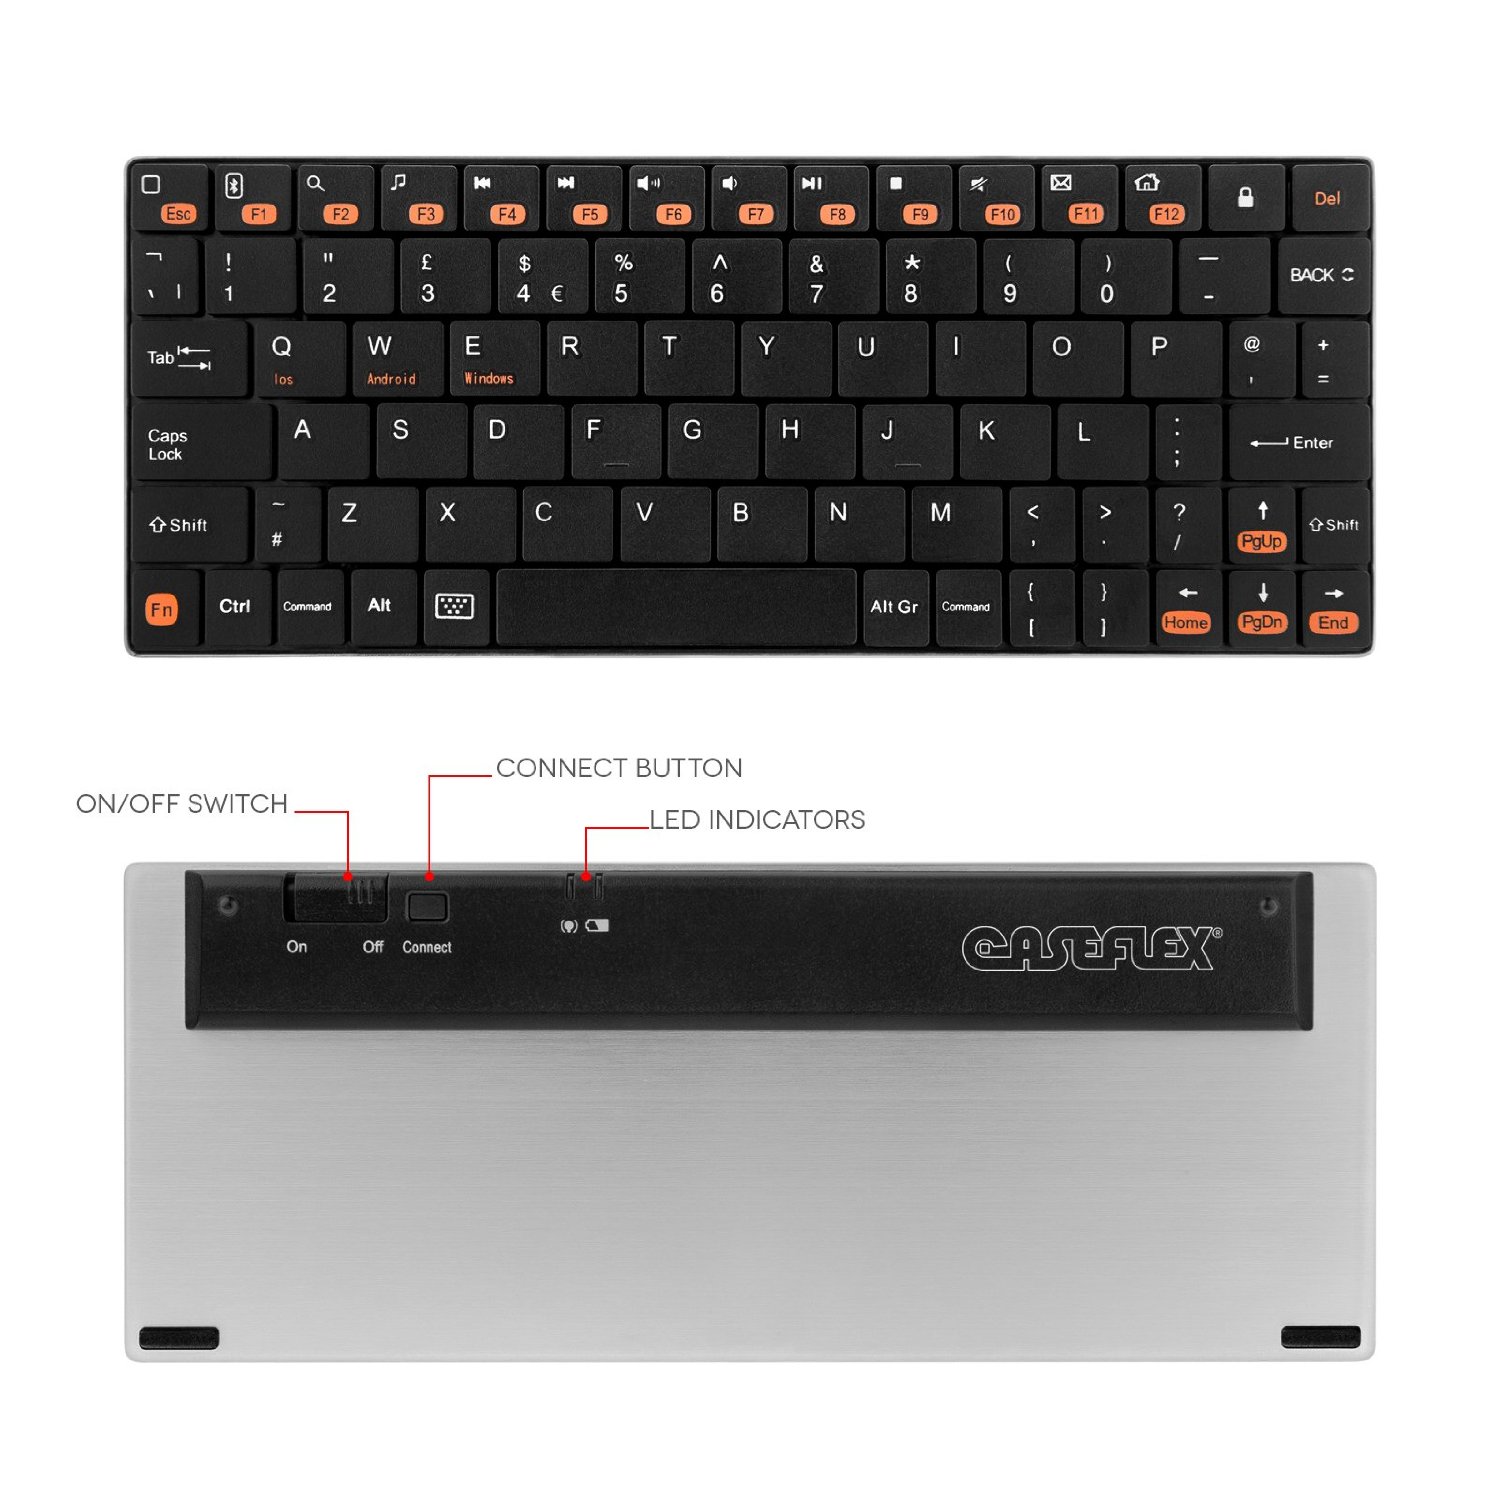 Caseflex Ultra Compact Universal Bluetooth Keyboard -Black & Silver